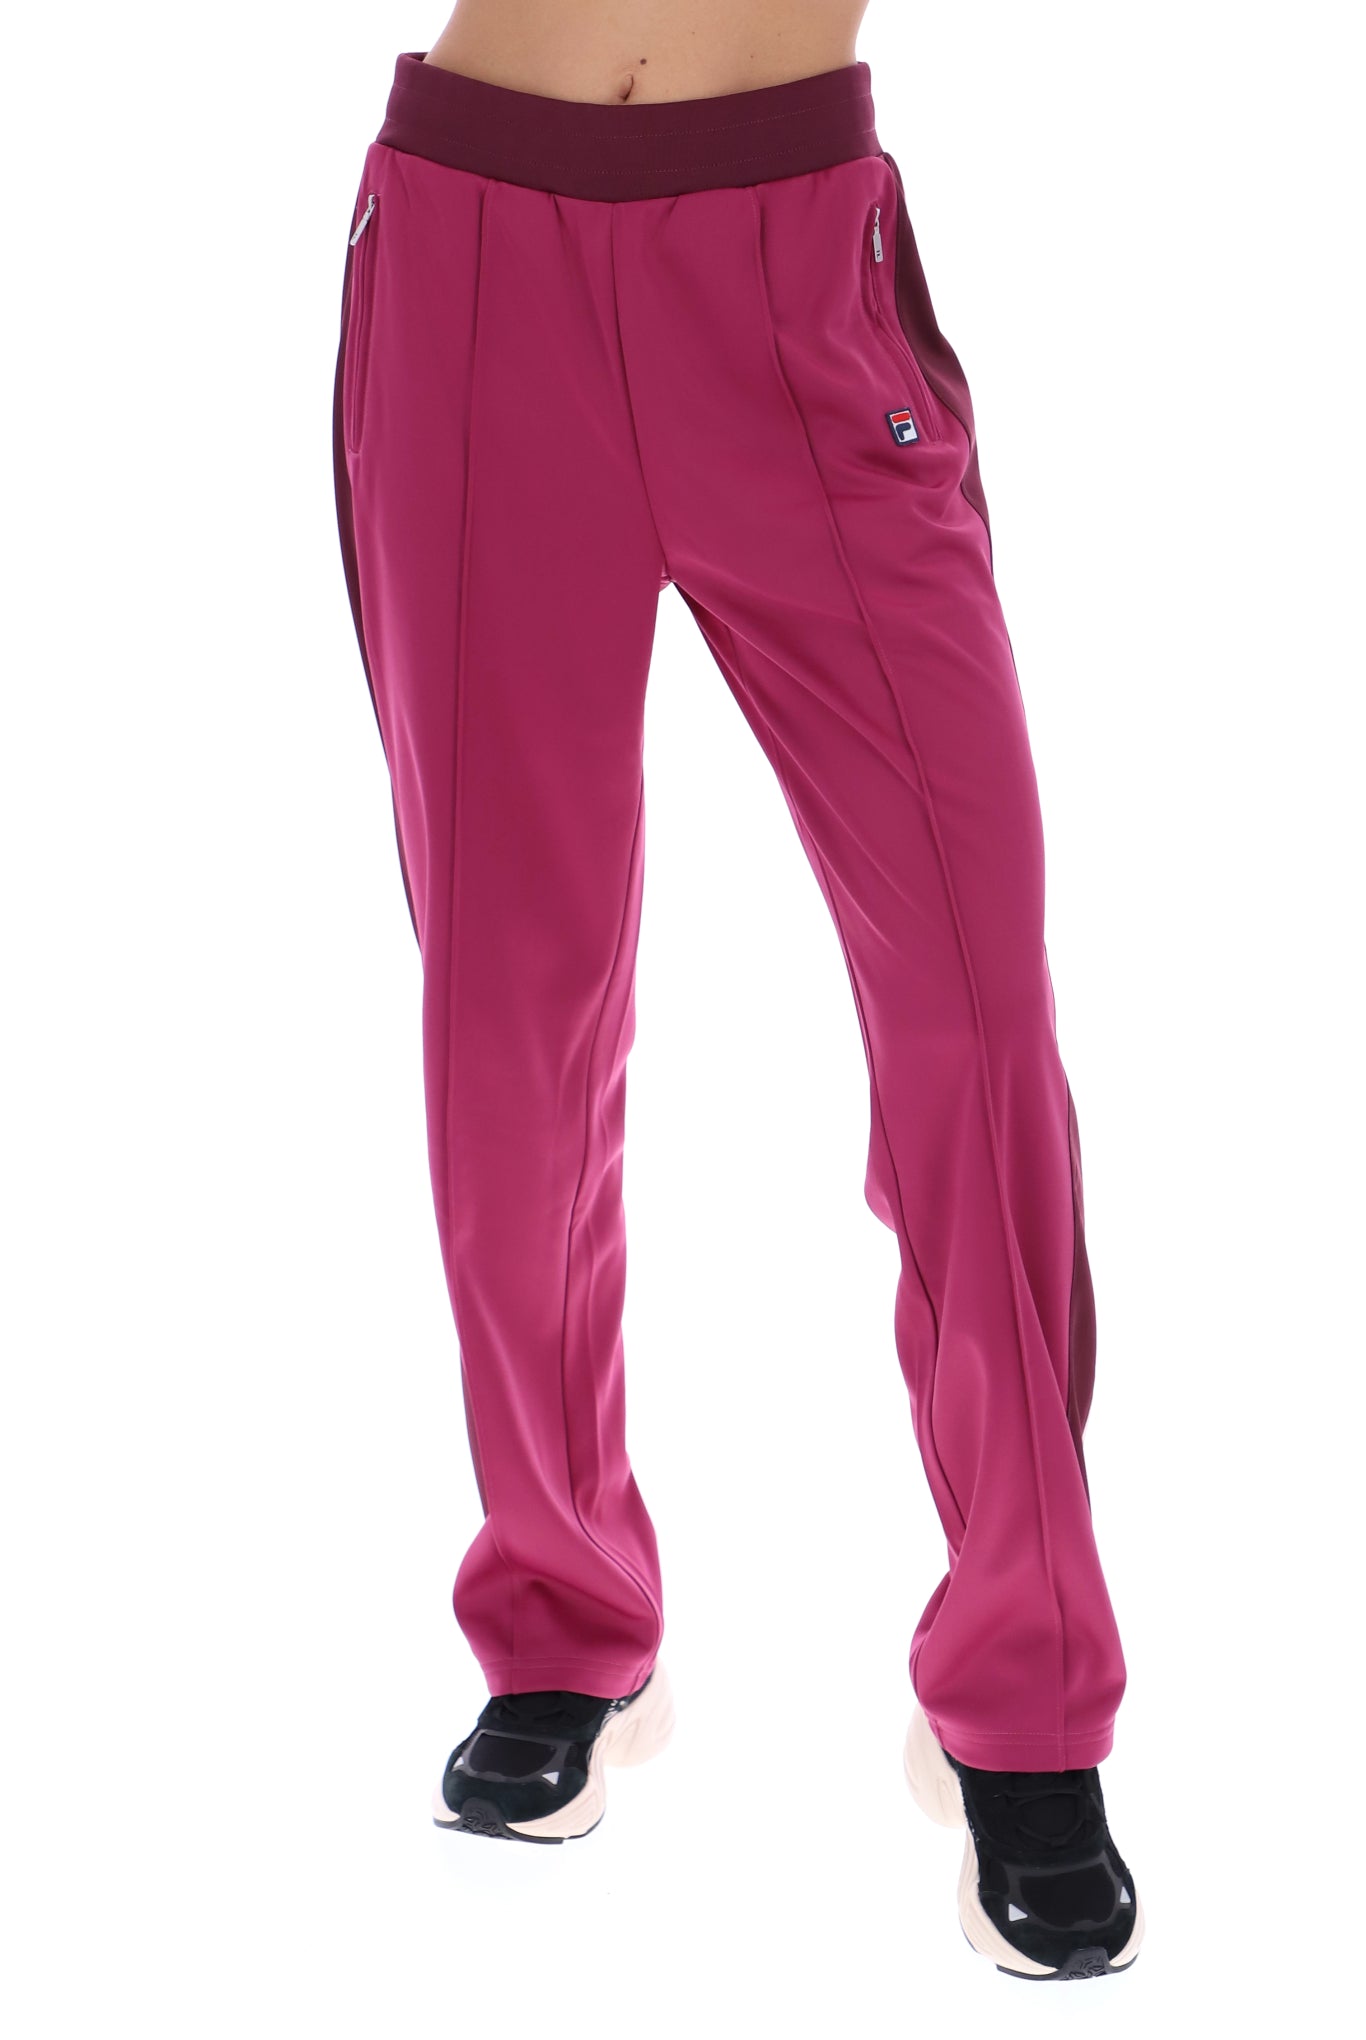 FILA women Hamo AOP track pant 687863 women pink pants - VertSport